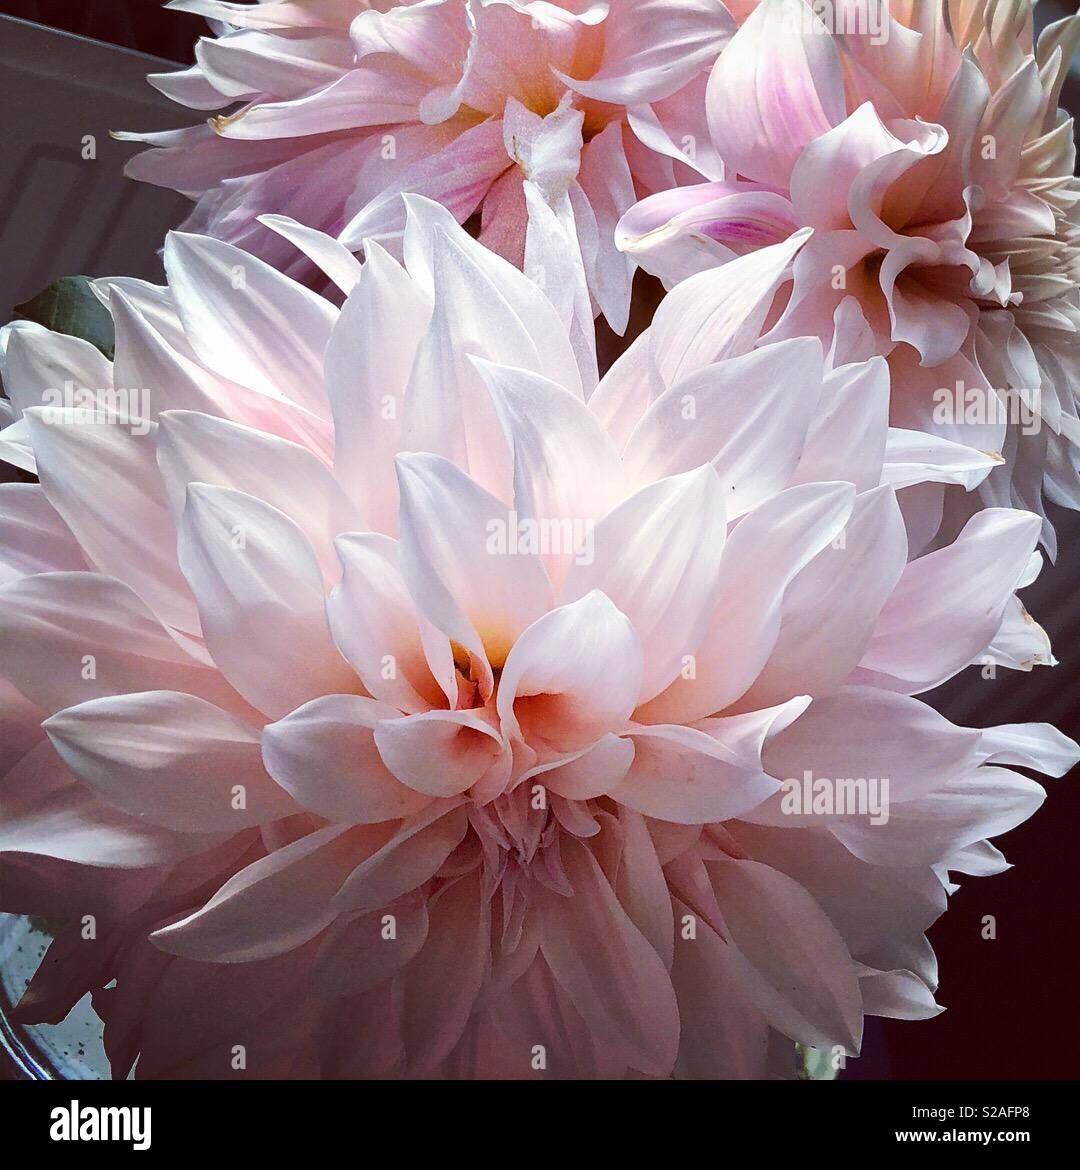 Dahlias in bloom Stock Photo